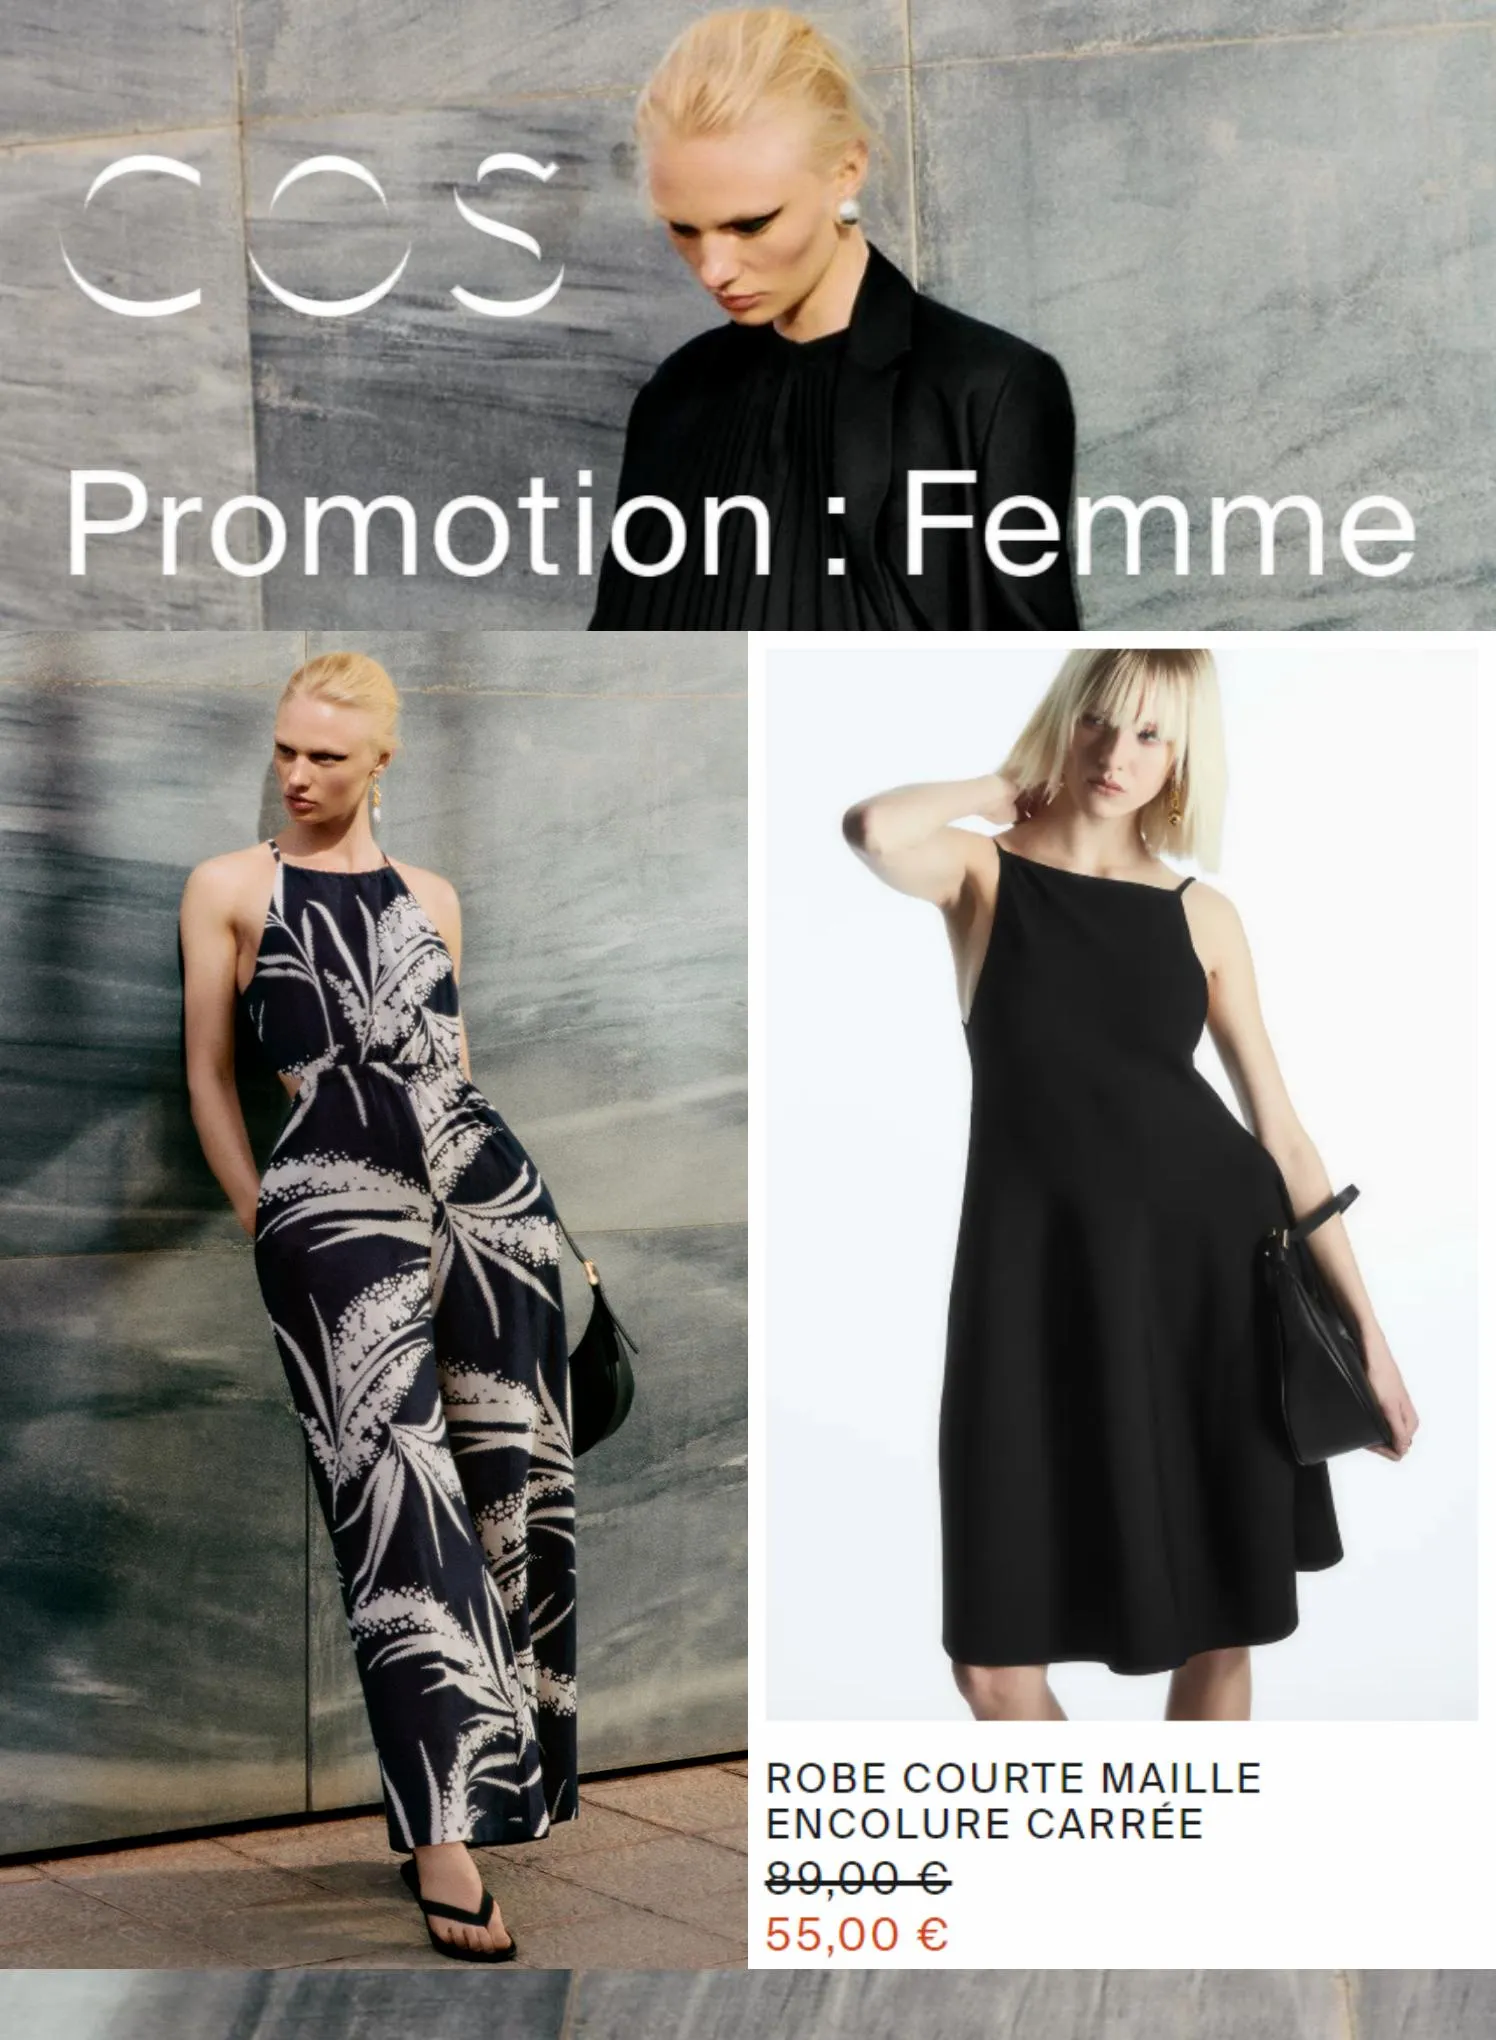 Catalogue Promotion: Femme, page 00001